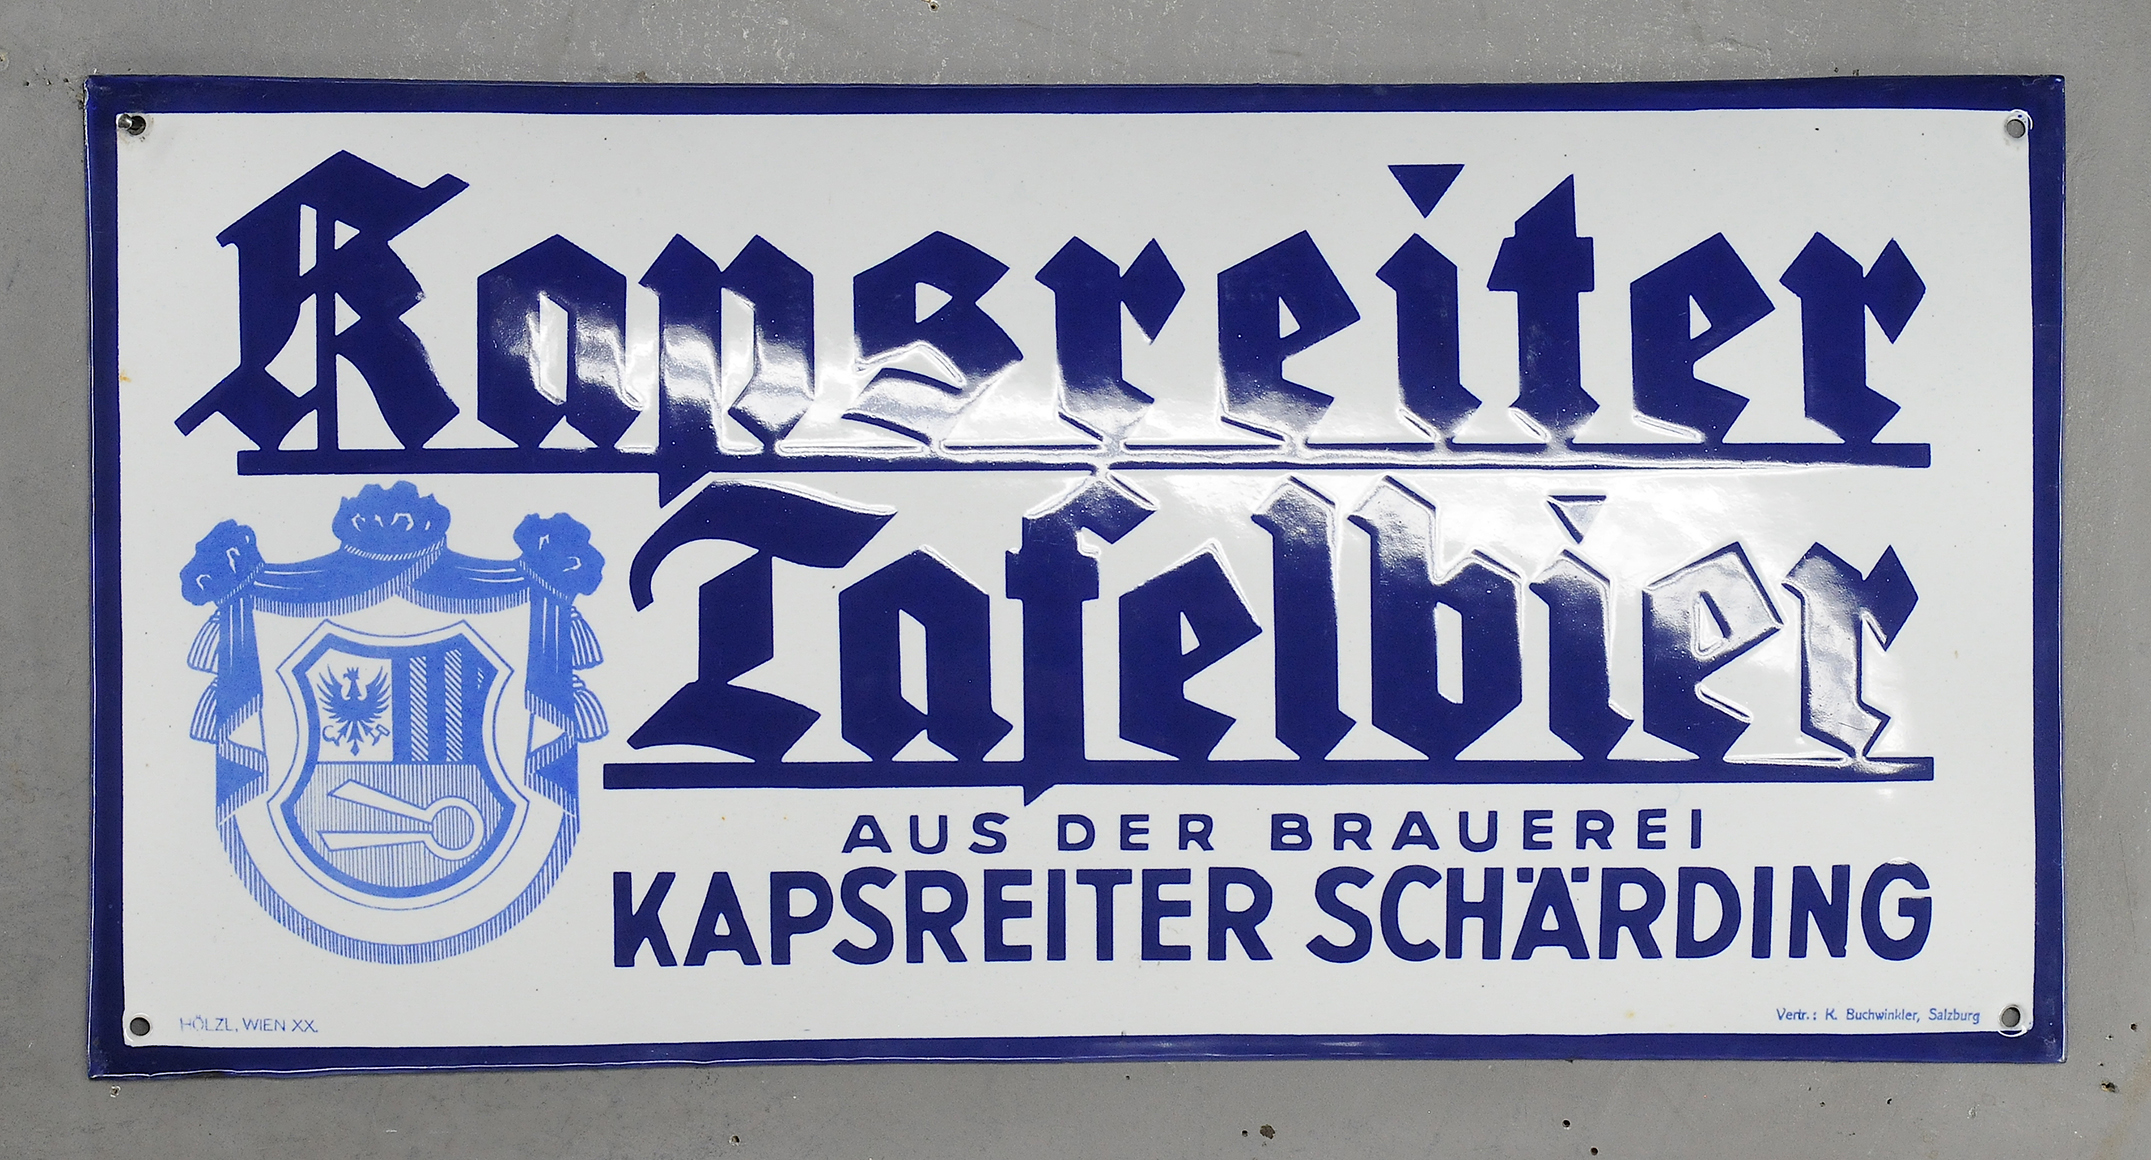 Kapsreiter Tafelbier - Image 3 of 3